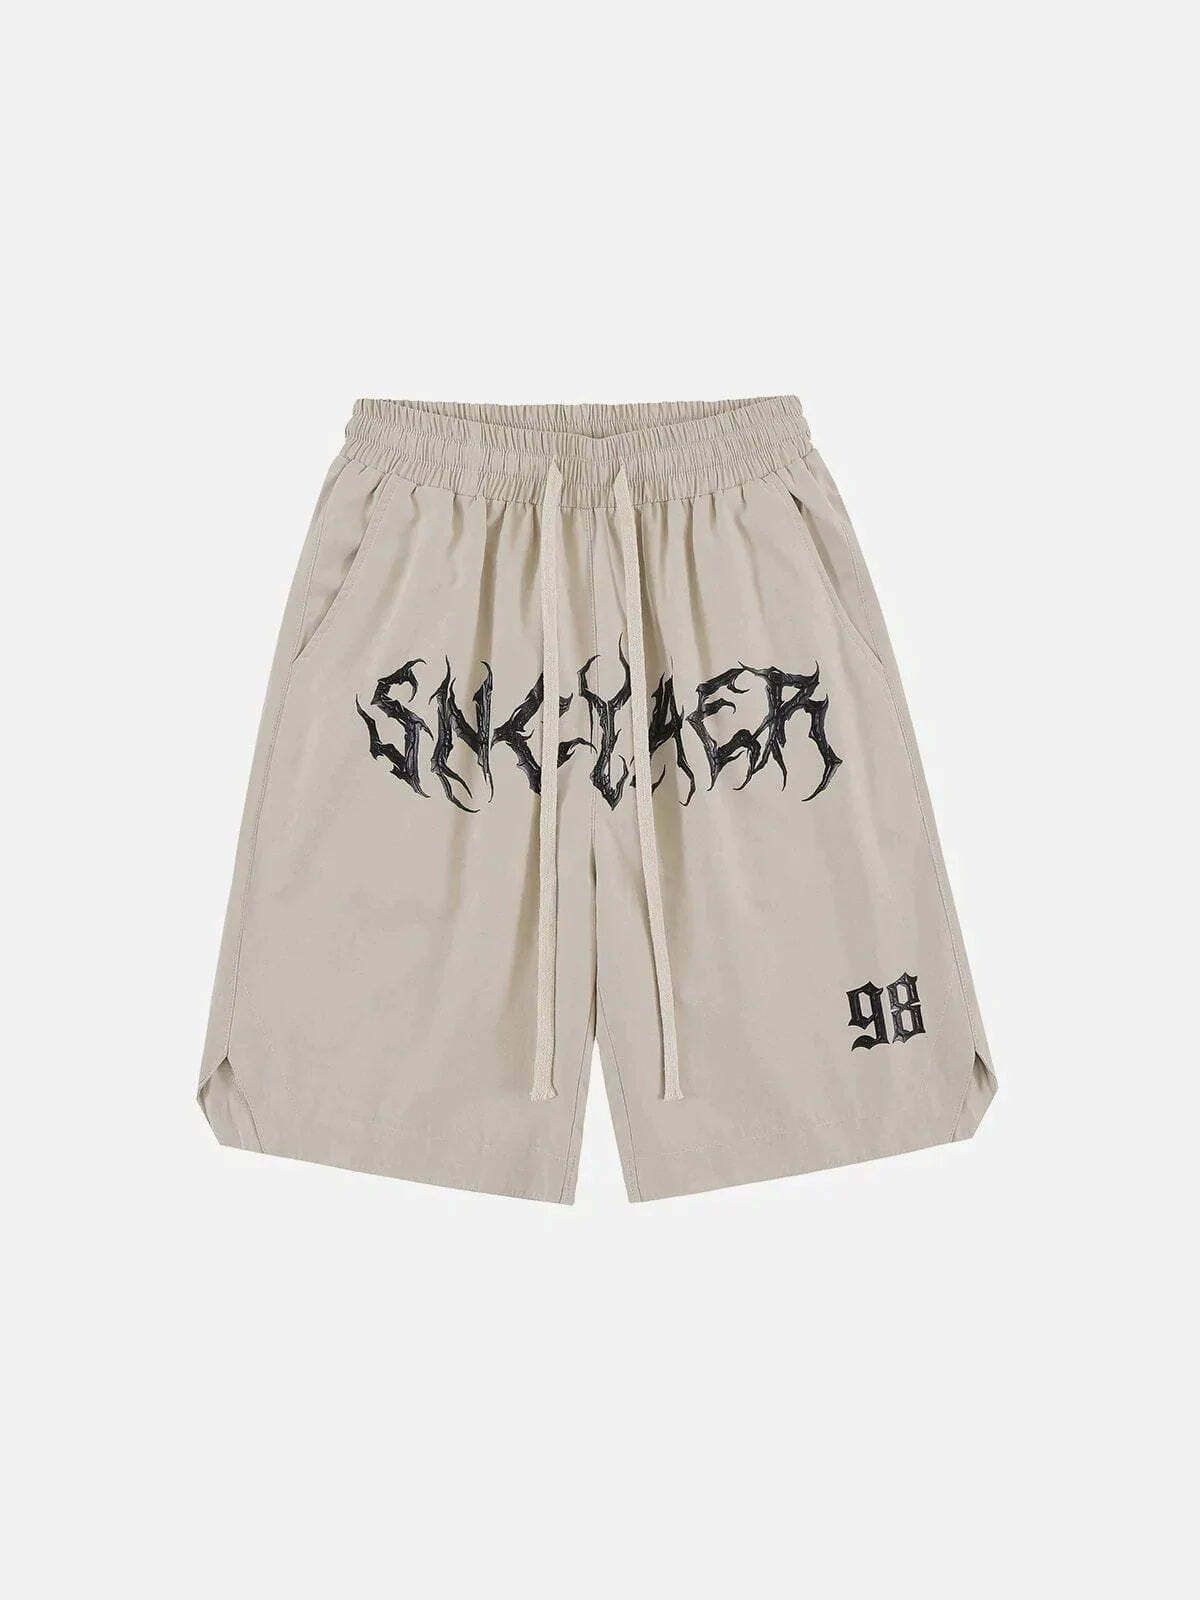 gothic alphabet zipup shorts edgy y2k streetwear 6175